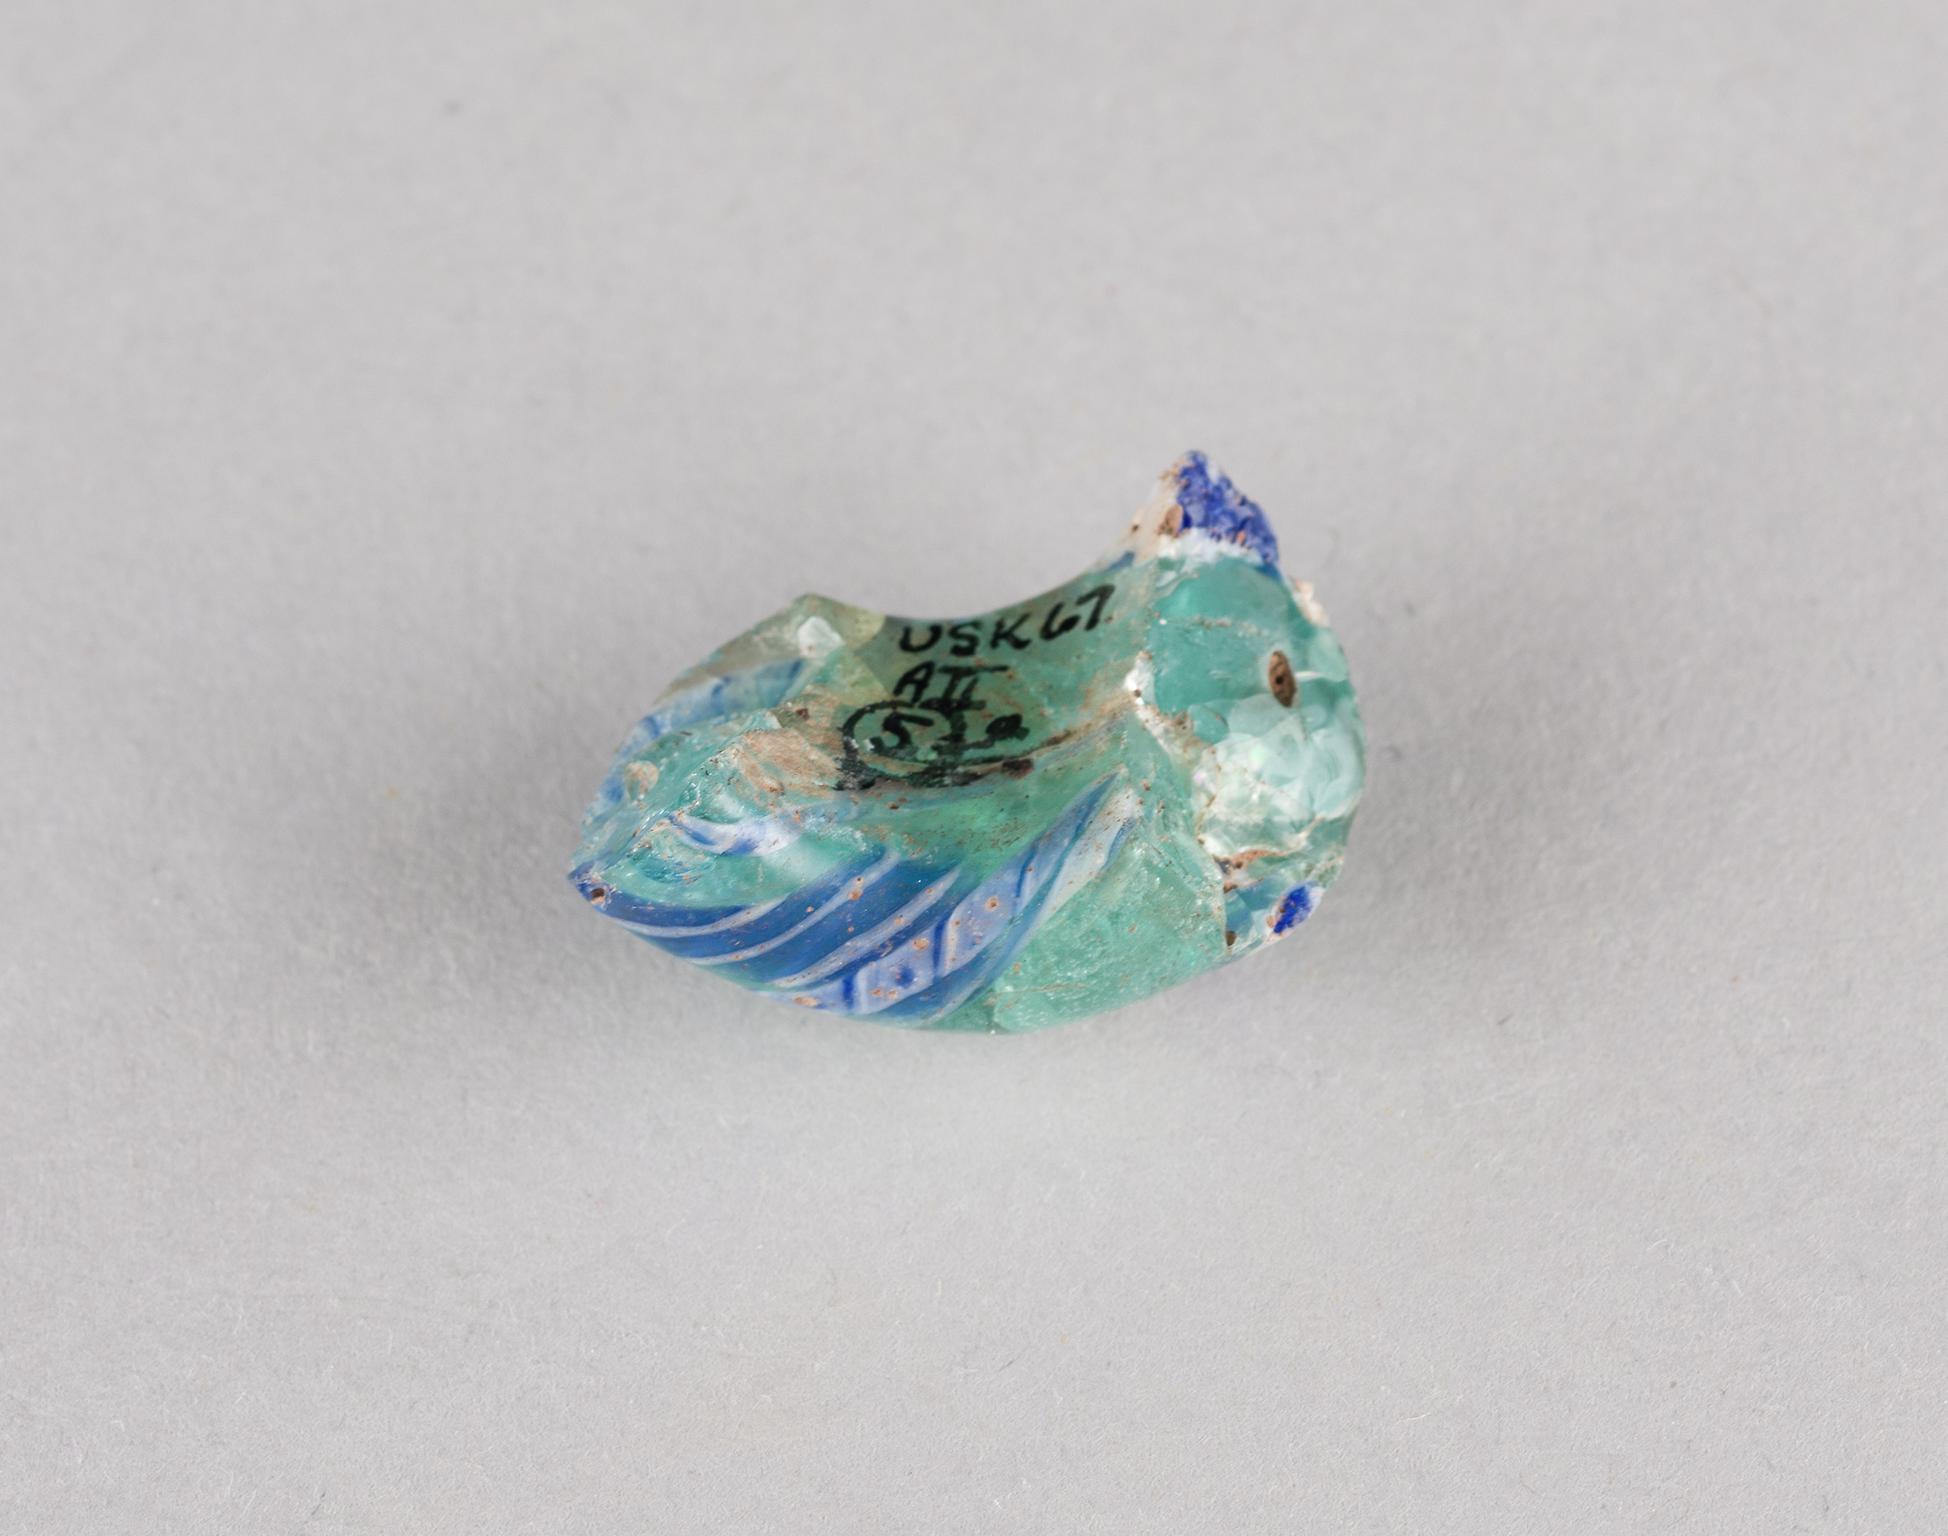 Roman glass annular bead